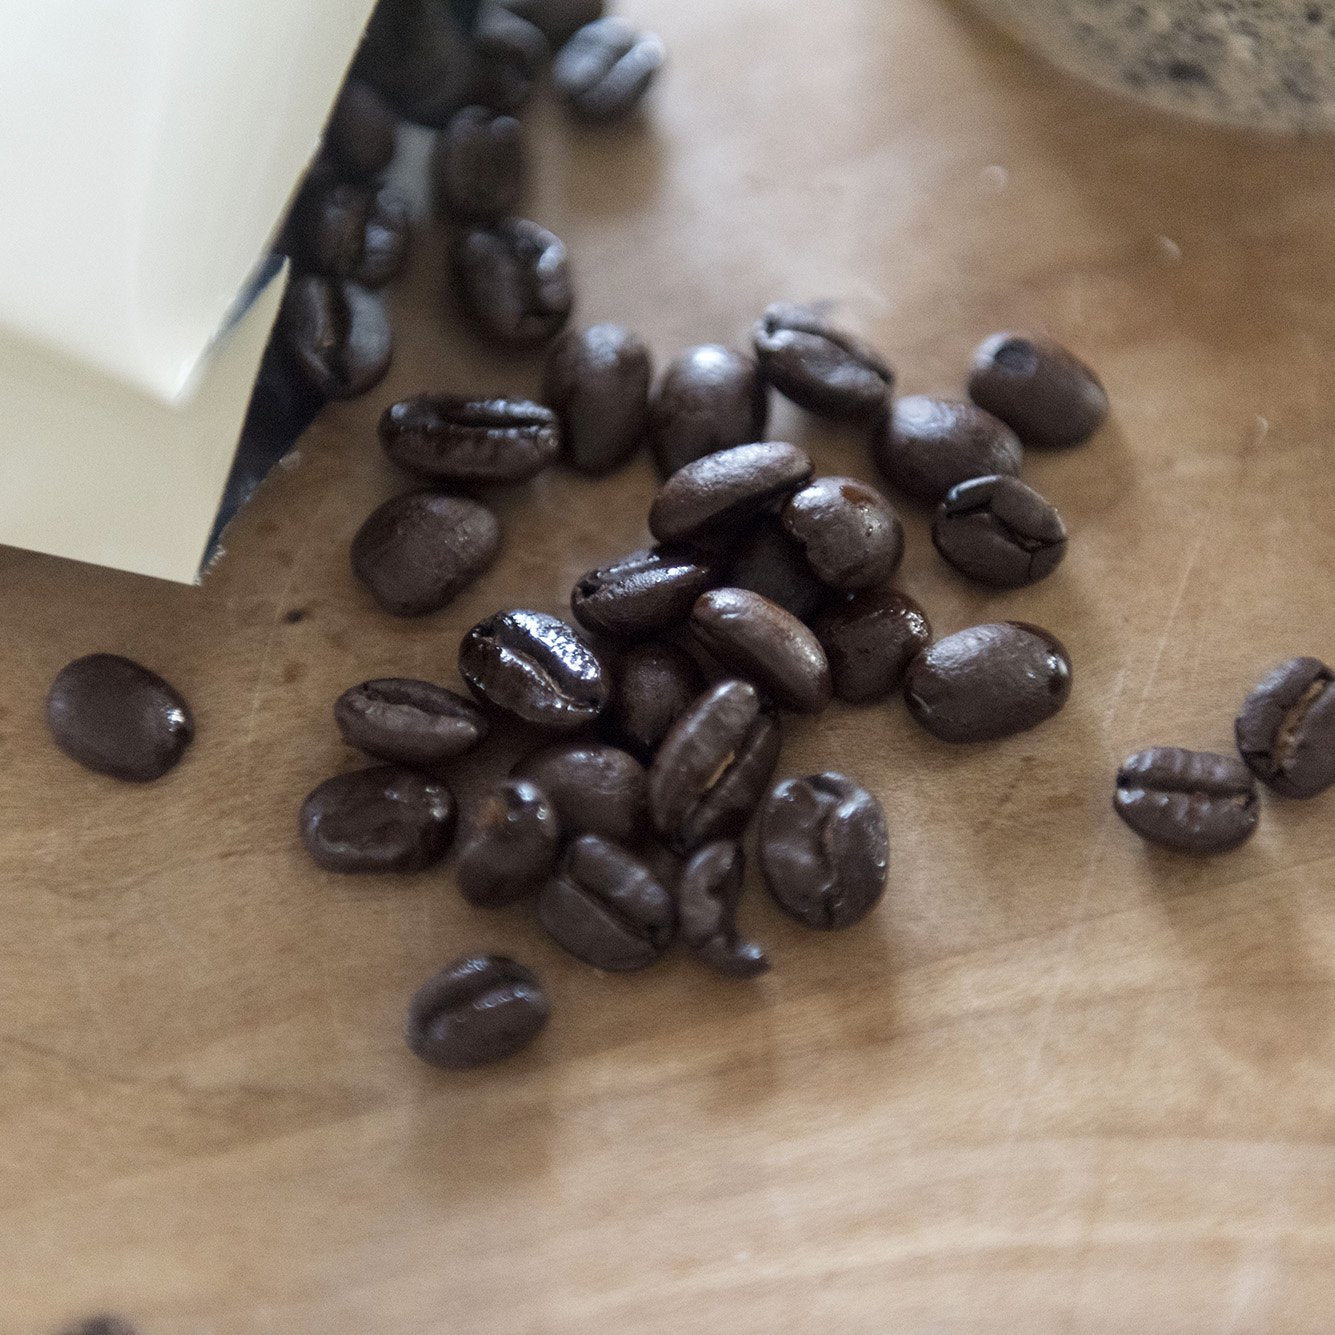 Coffee Kajita コーヒー豆（豆／粉）